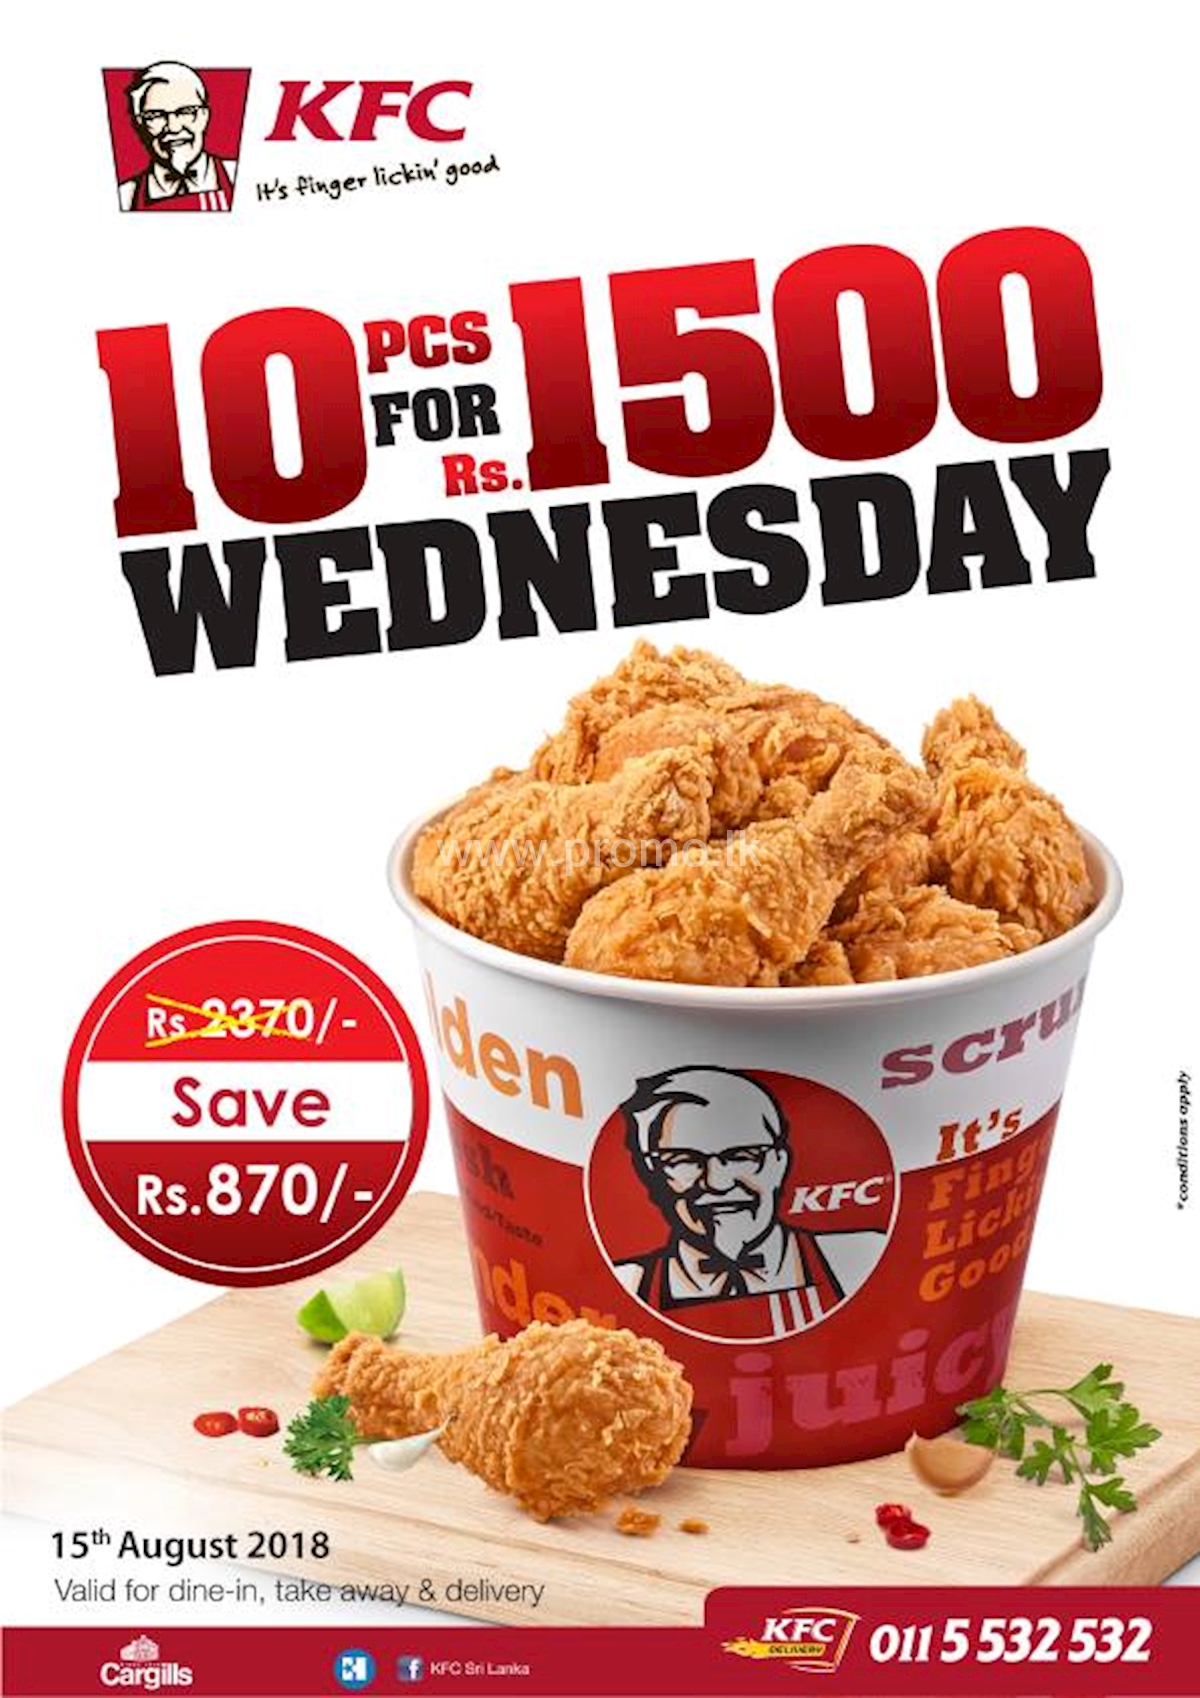 KFC Hot & Crispy Wednesday